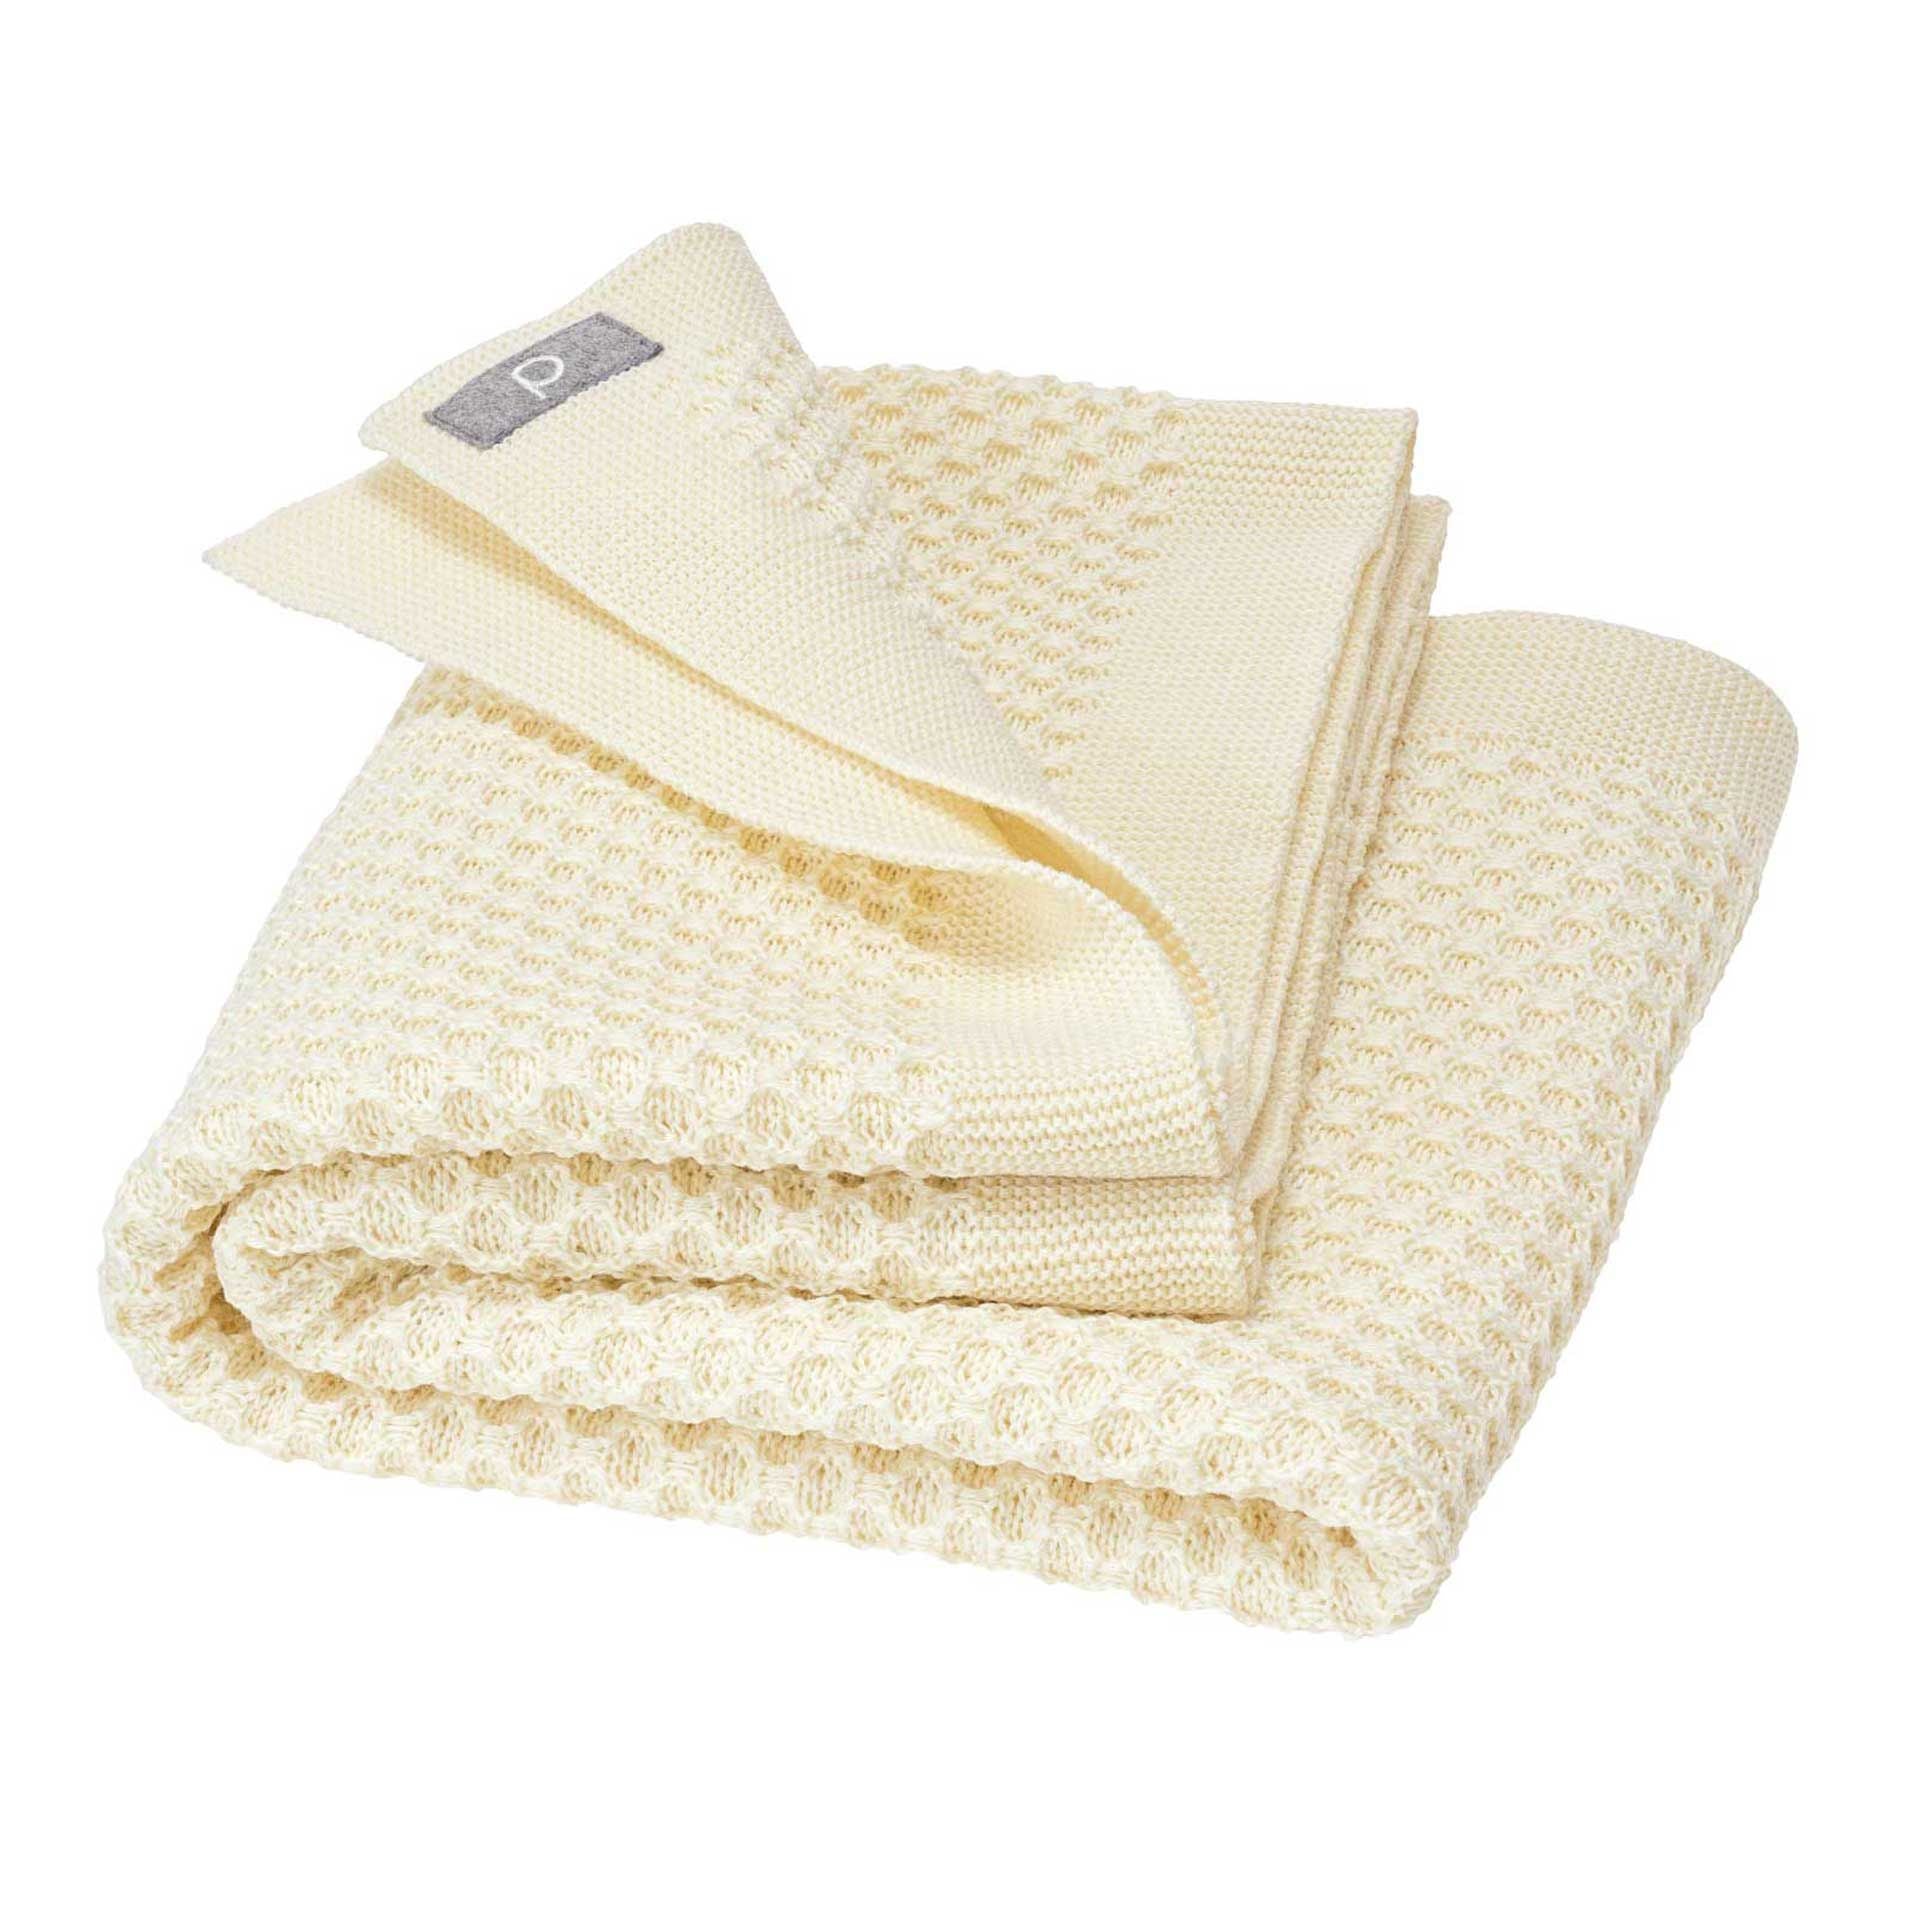 Disana's honeycomb blanket in natural. Made of 100% soft merino wool.